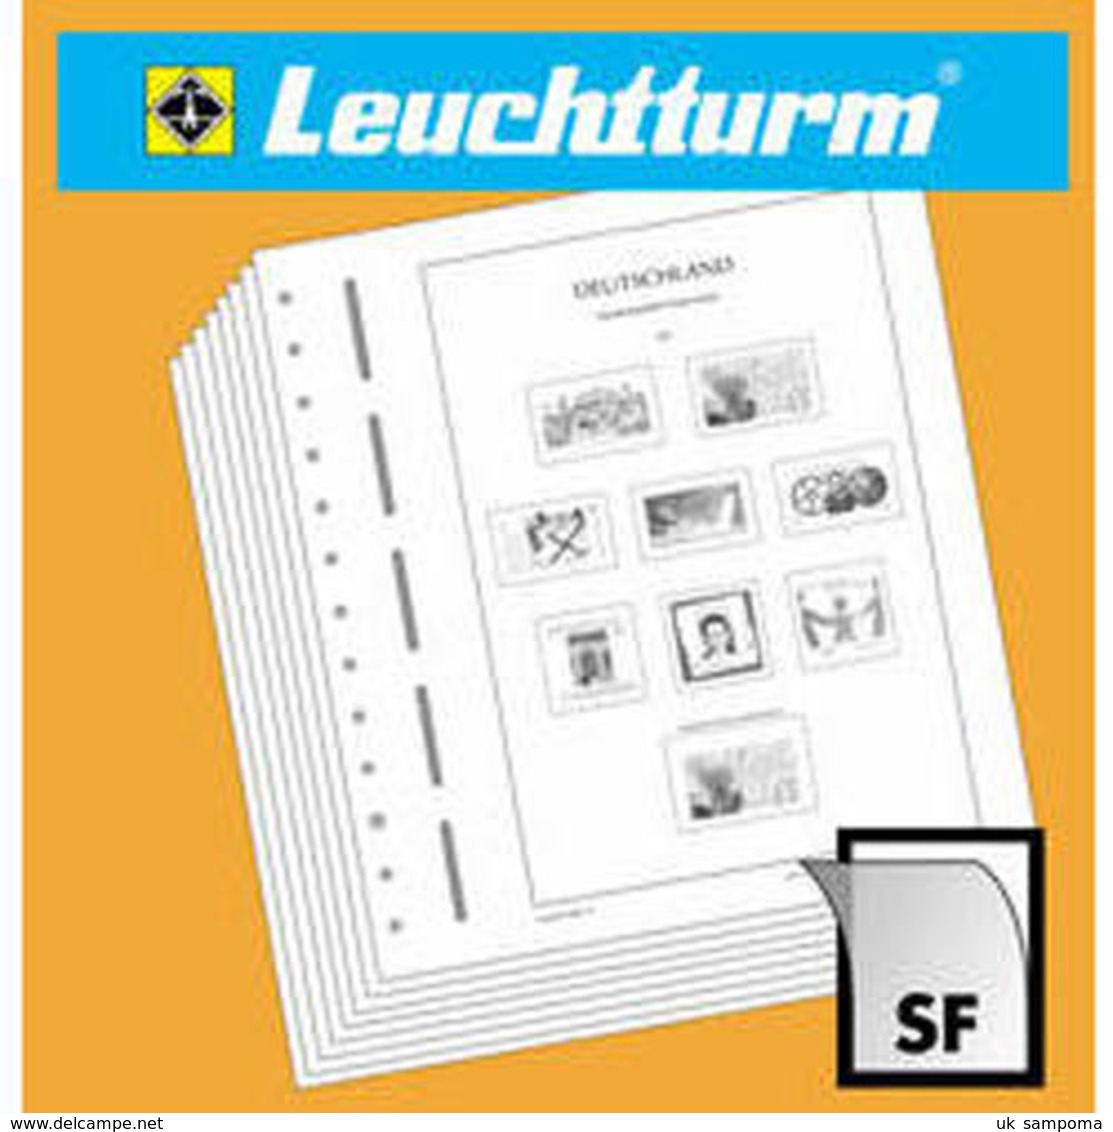 LEUCHTTURM SF-Vordruckalbum EXCELLENT DE, CL-Design UDSSR 1984-1991 Inkl.Schutzkass. Rot - Pre-printed Pages